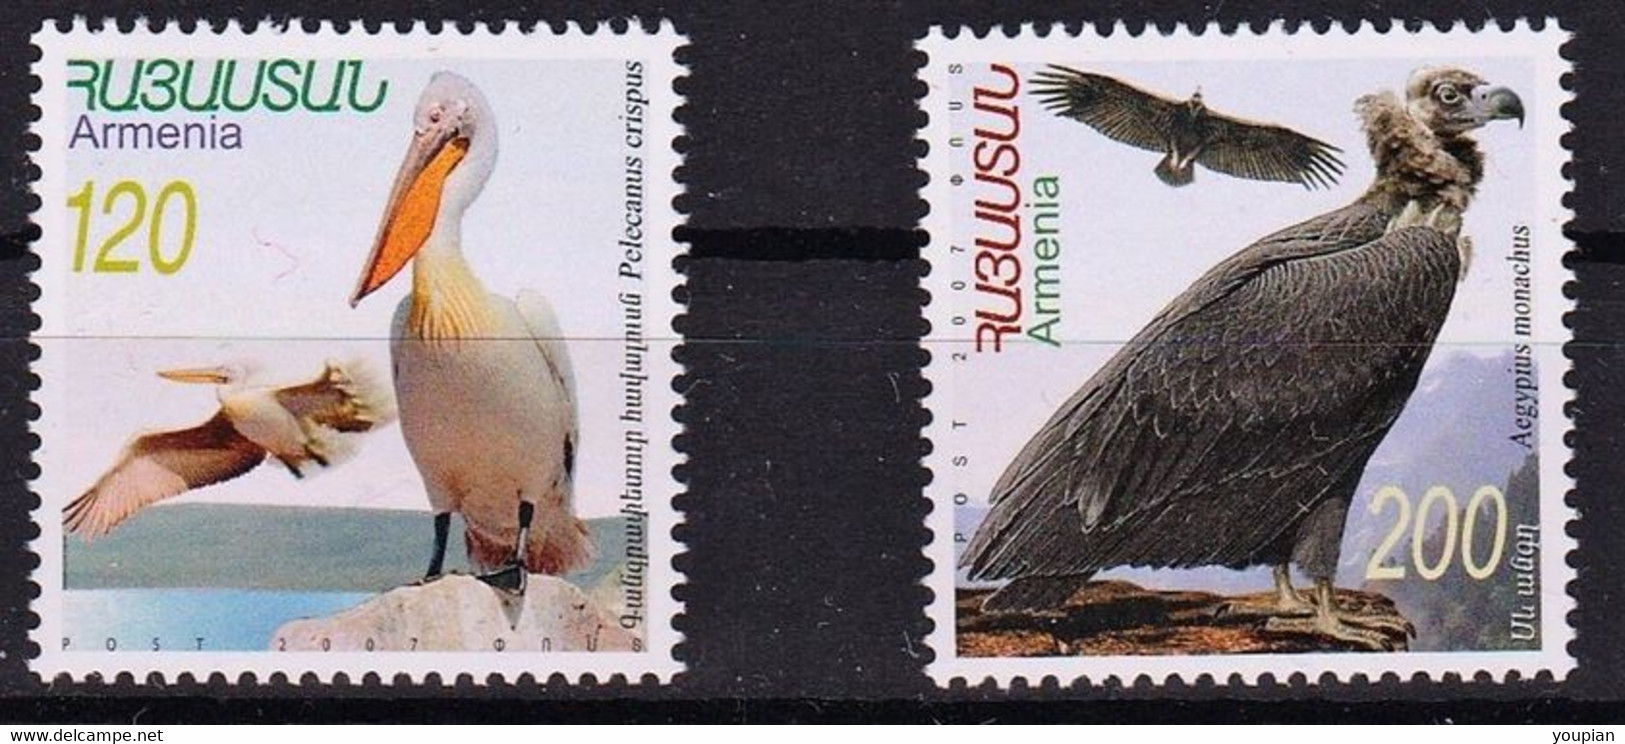 Armenia 2007, Fauna - Birds, MNH Stamps Set - Armenia